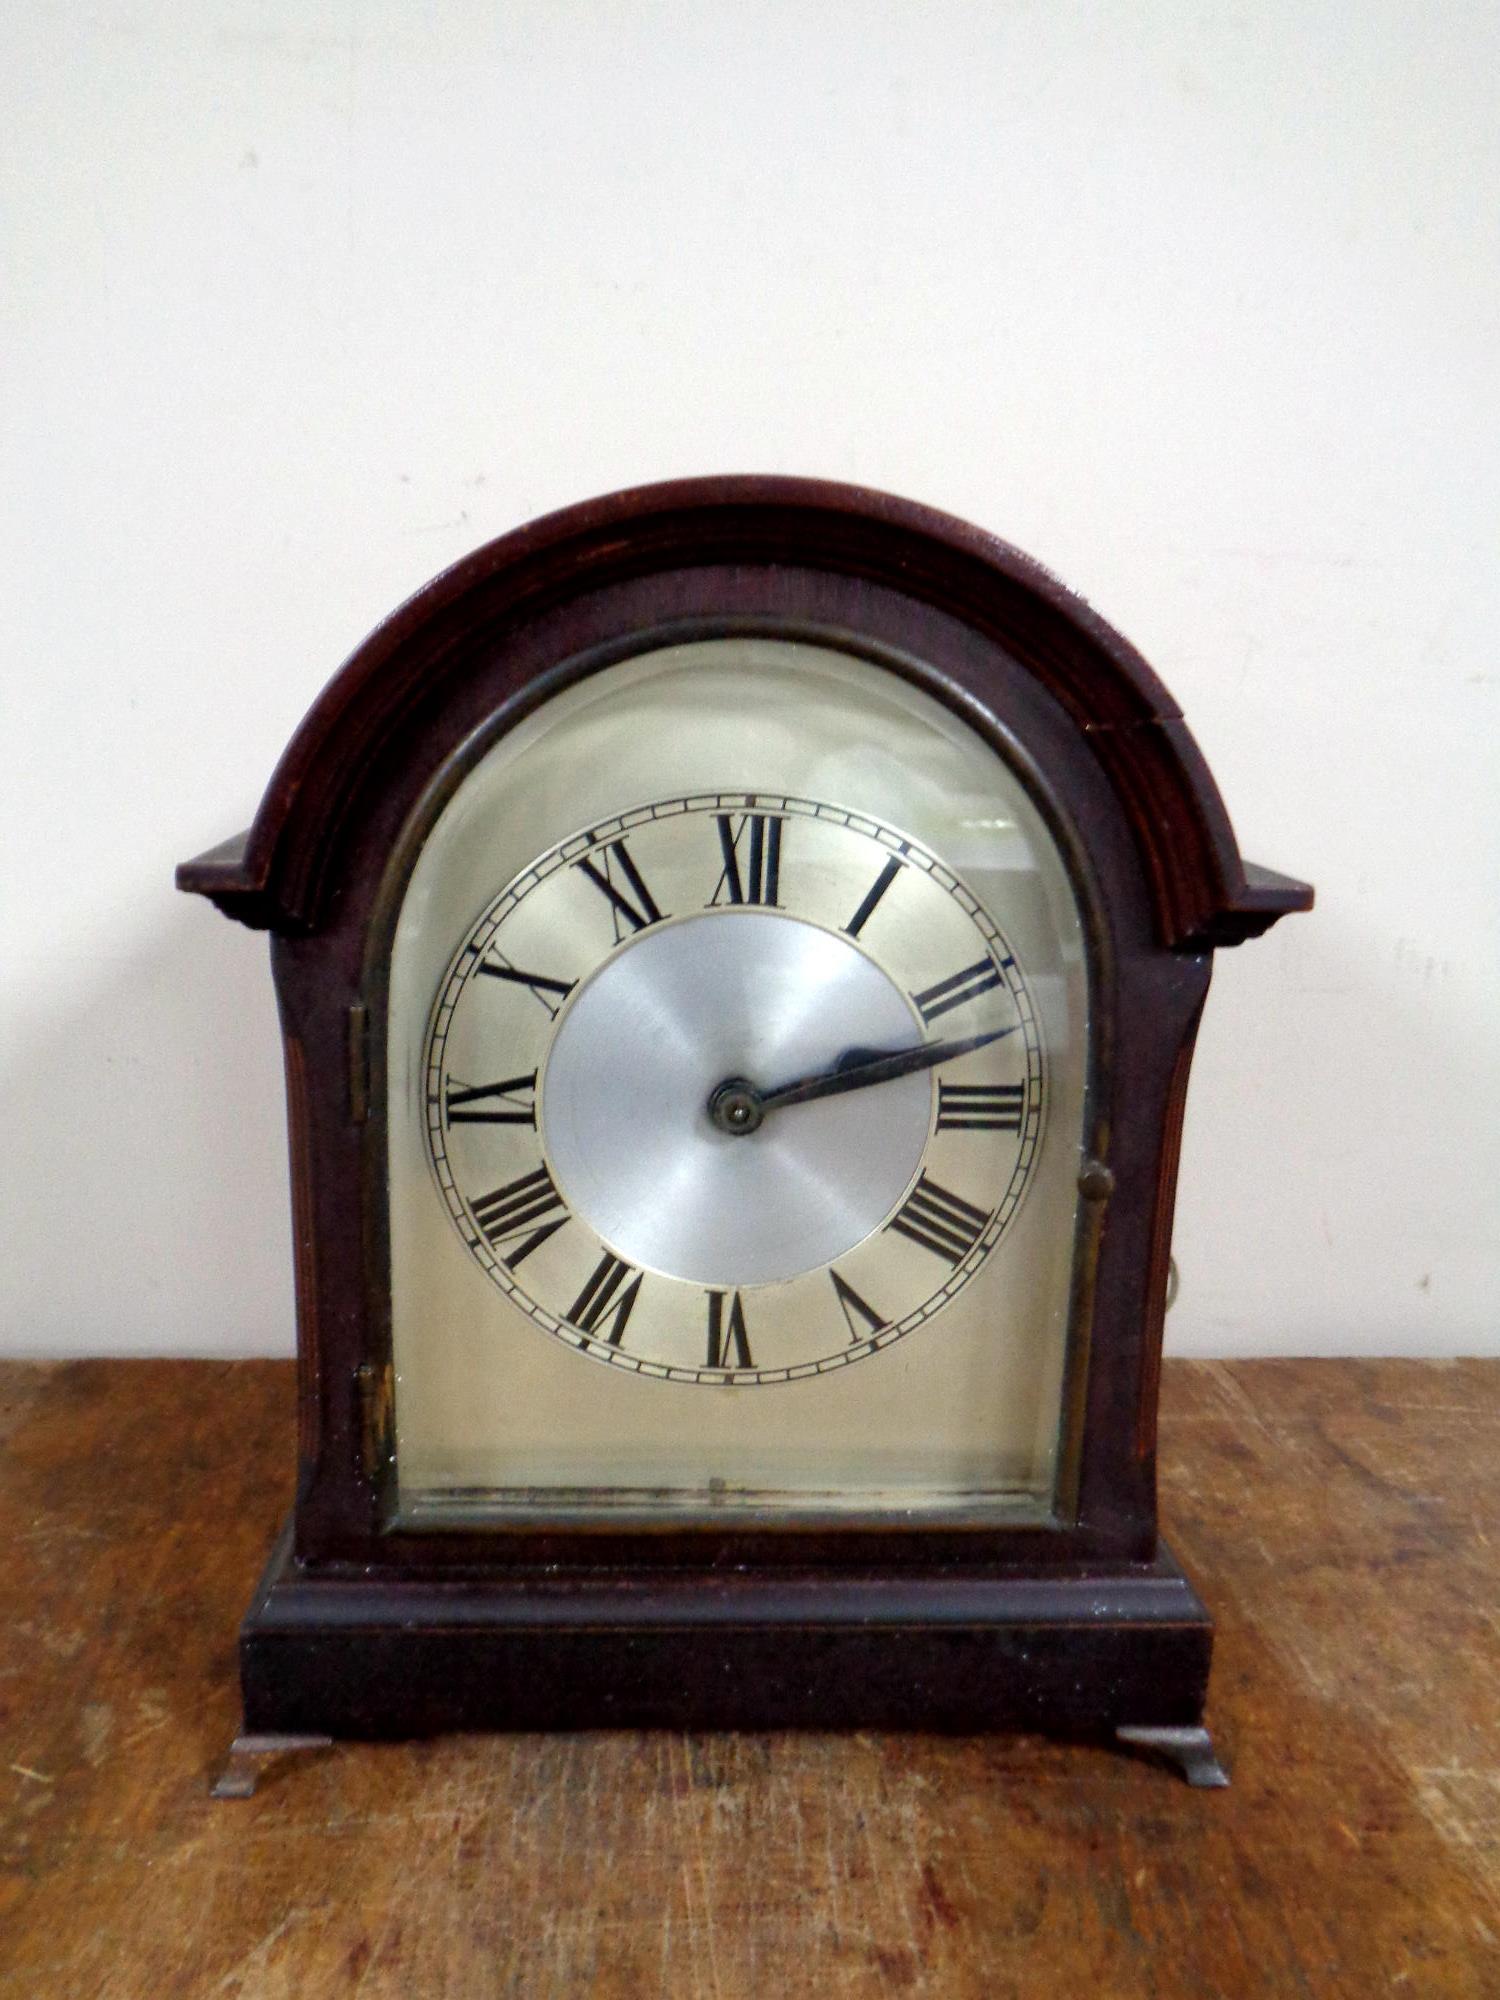 An early twentieth century mantel clock (electric)